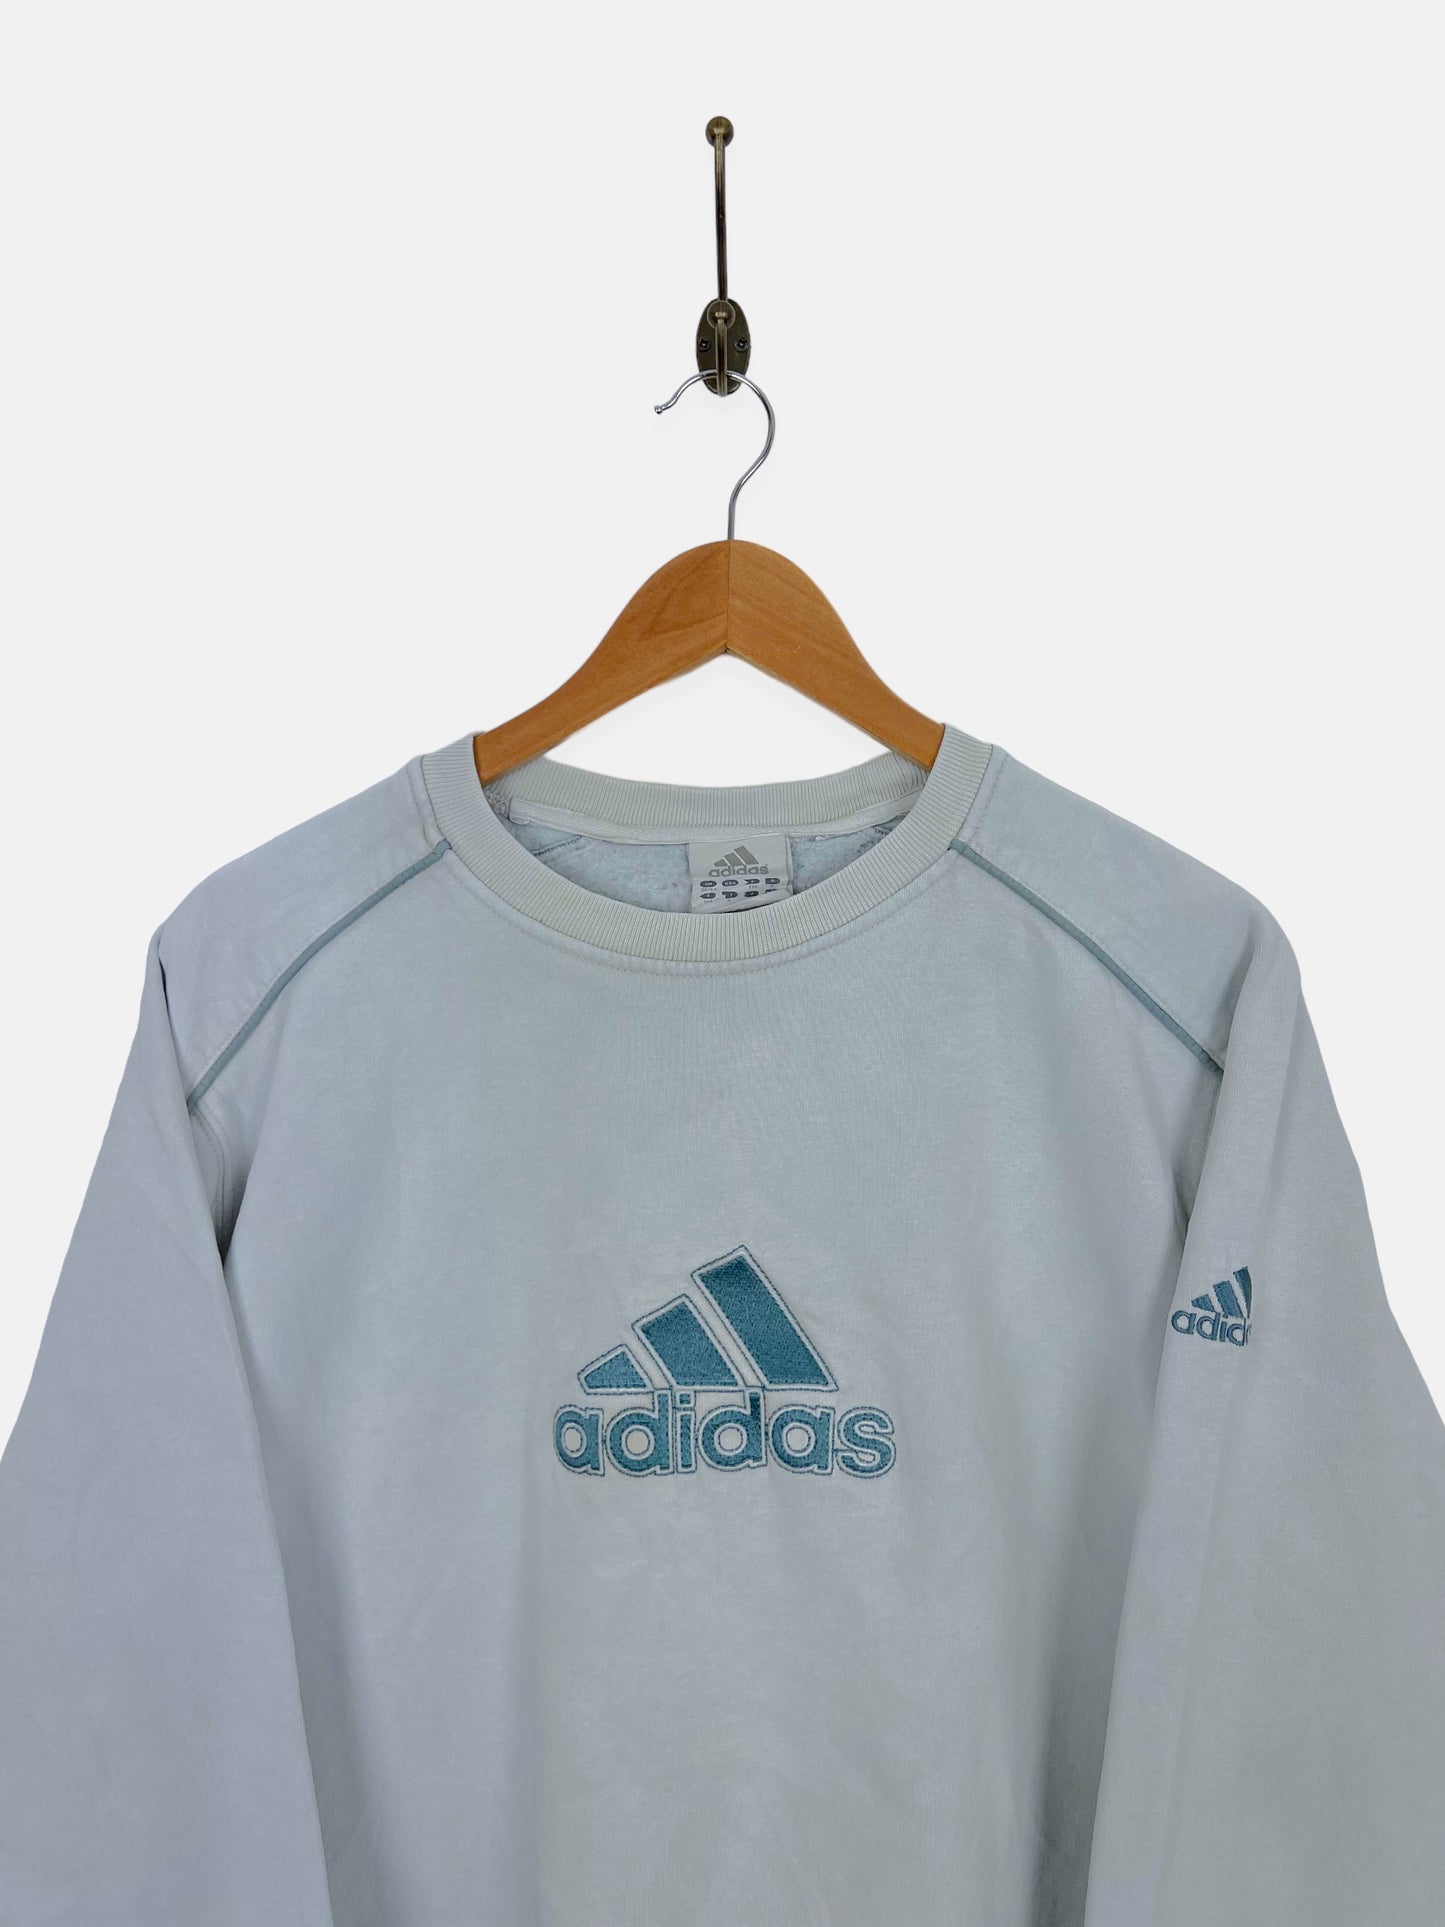 90's Adidas Embroidered Vintage Sweatshirt Size 10-12